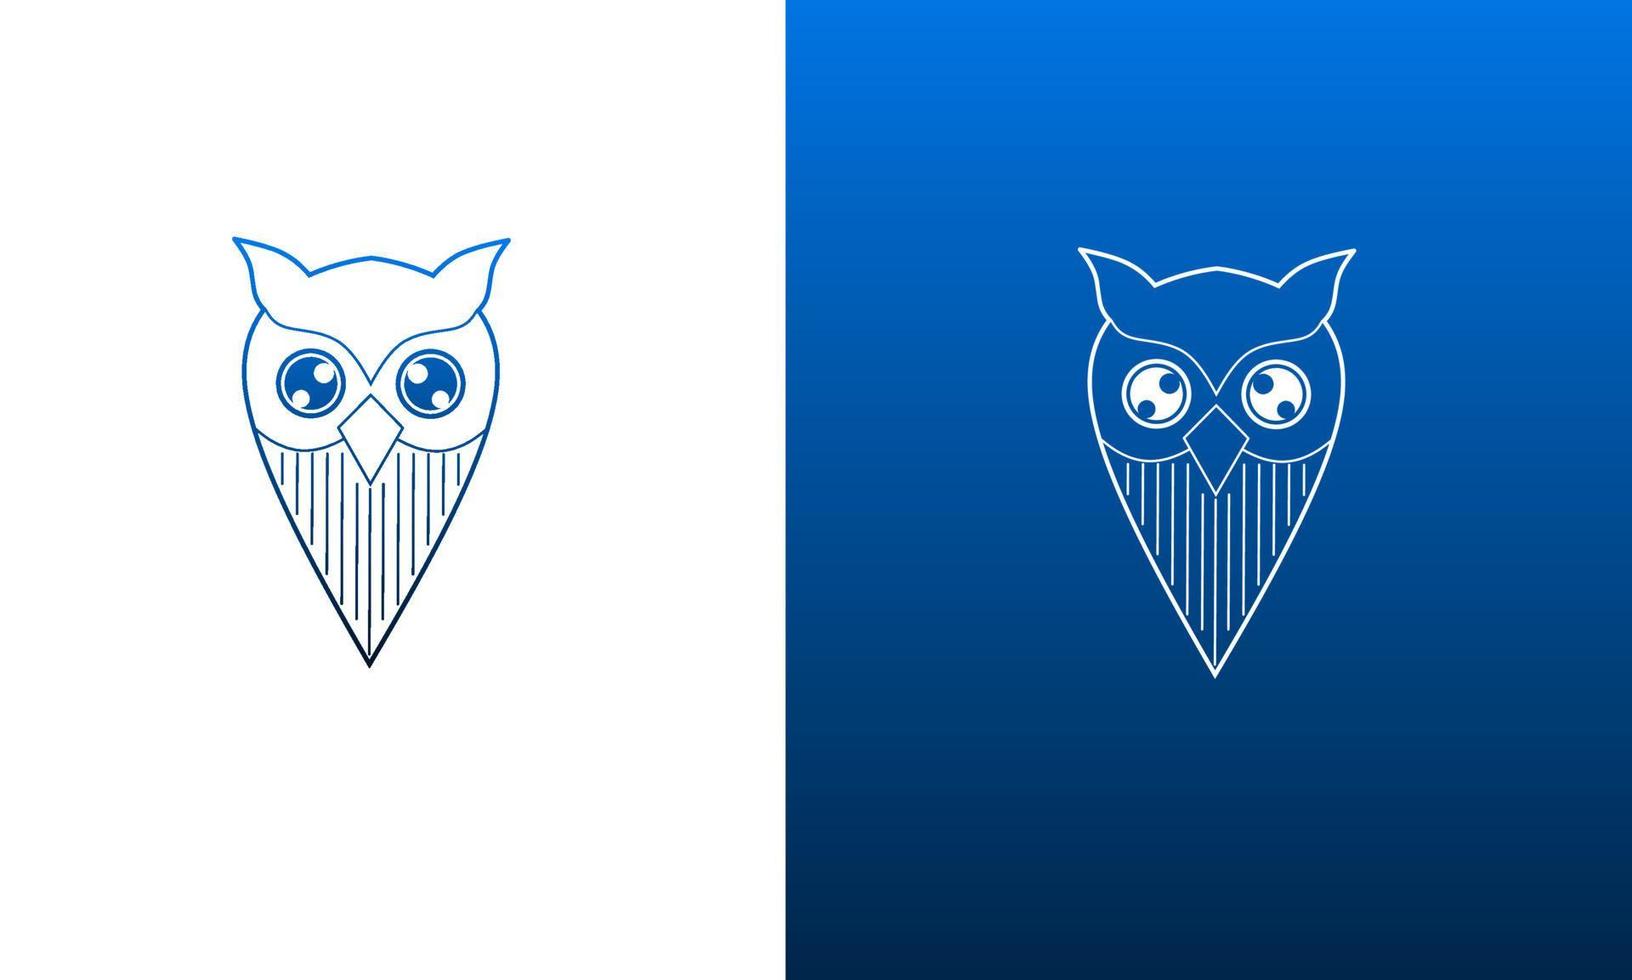 Template logo owl shape icon location vector